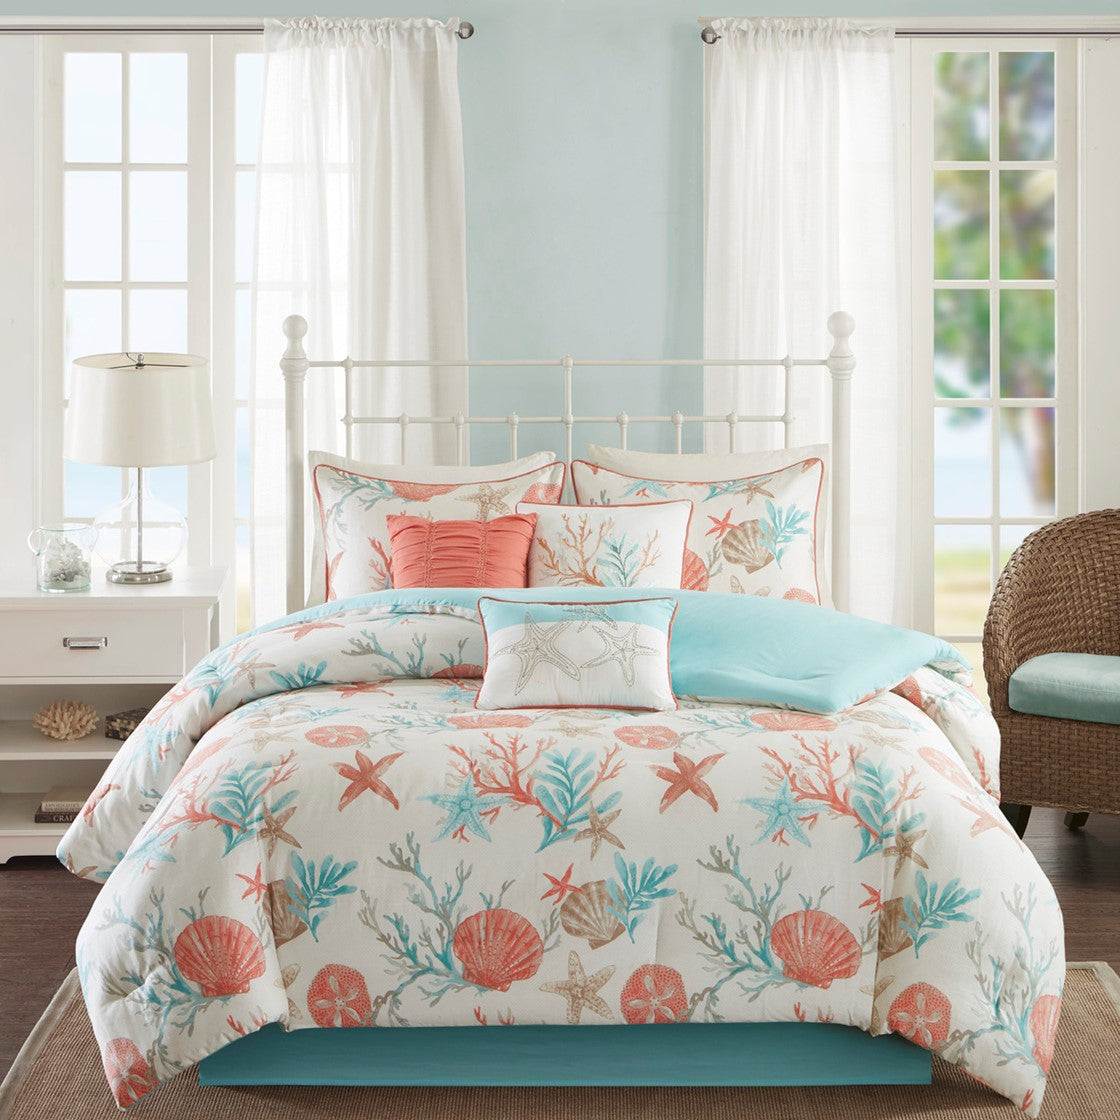 Beach & Coastal Style Bedding Set Sale - Shop Online & Save On Top Rated Bedding Set Brands at ExpressHomeDirect.com